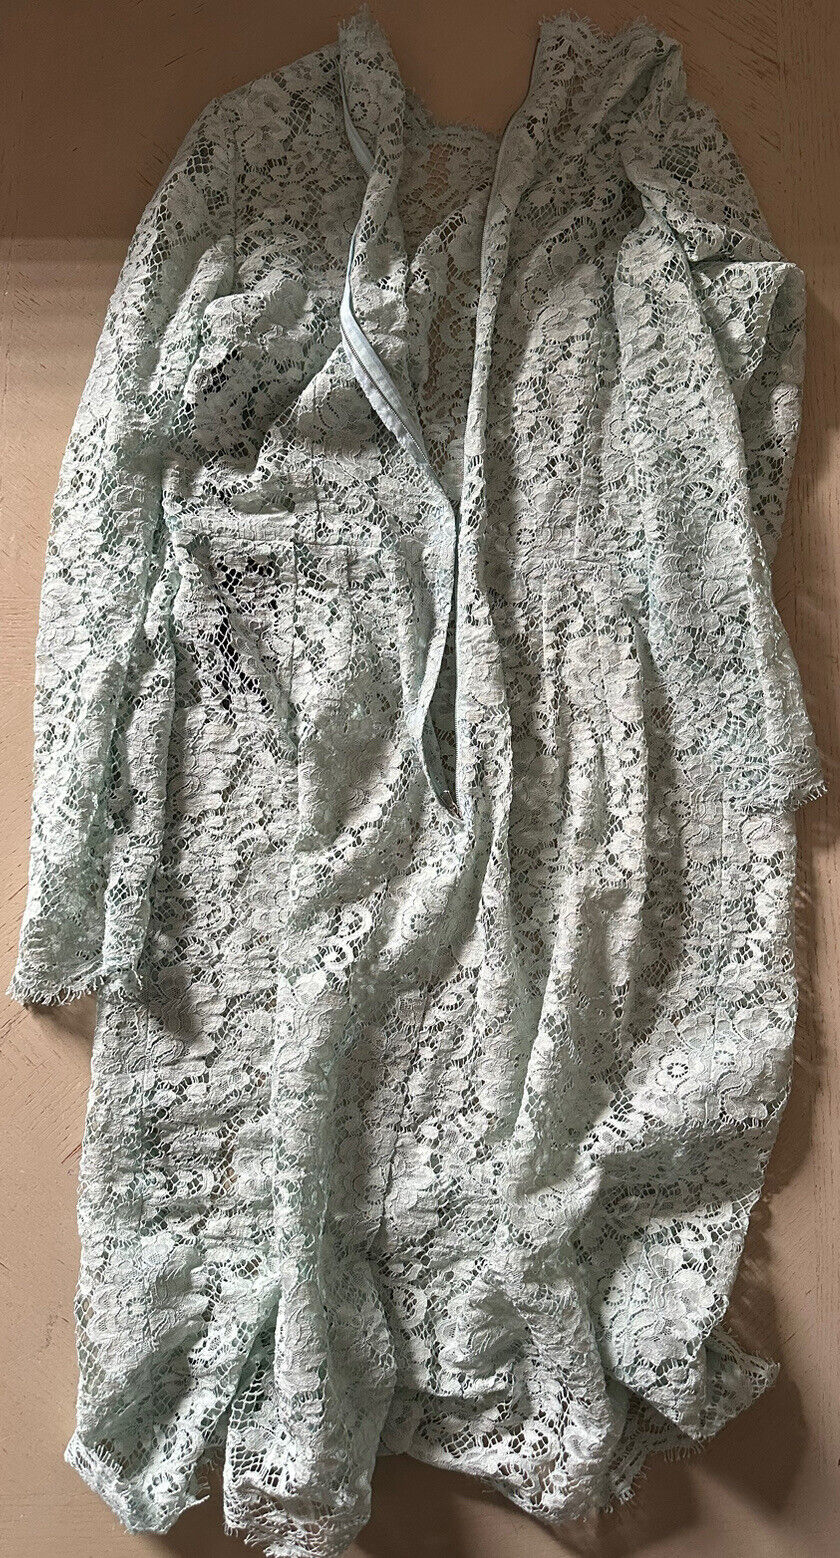 New $2645 DOLCE&GABBANA Lace  Sheath Dress Size 52/18